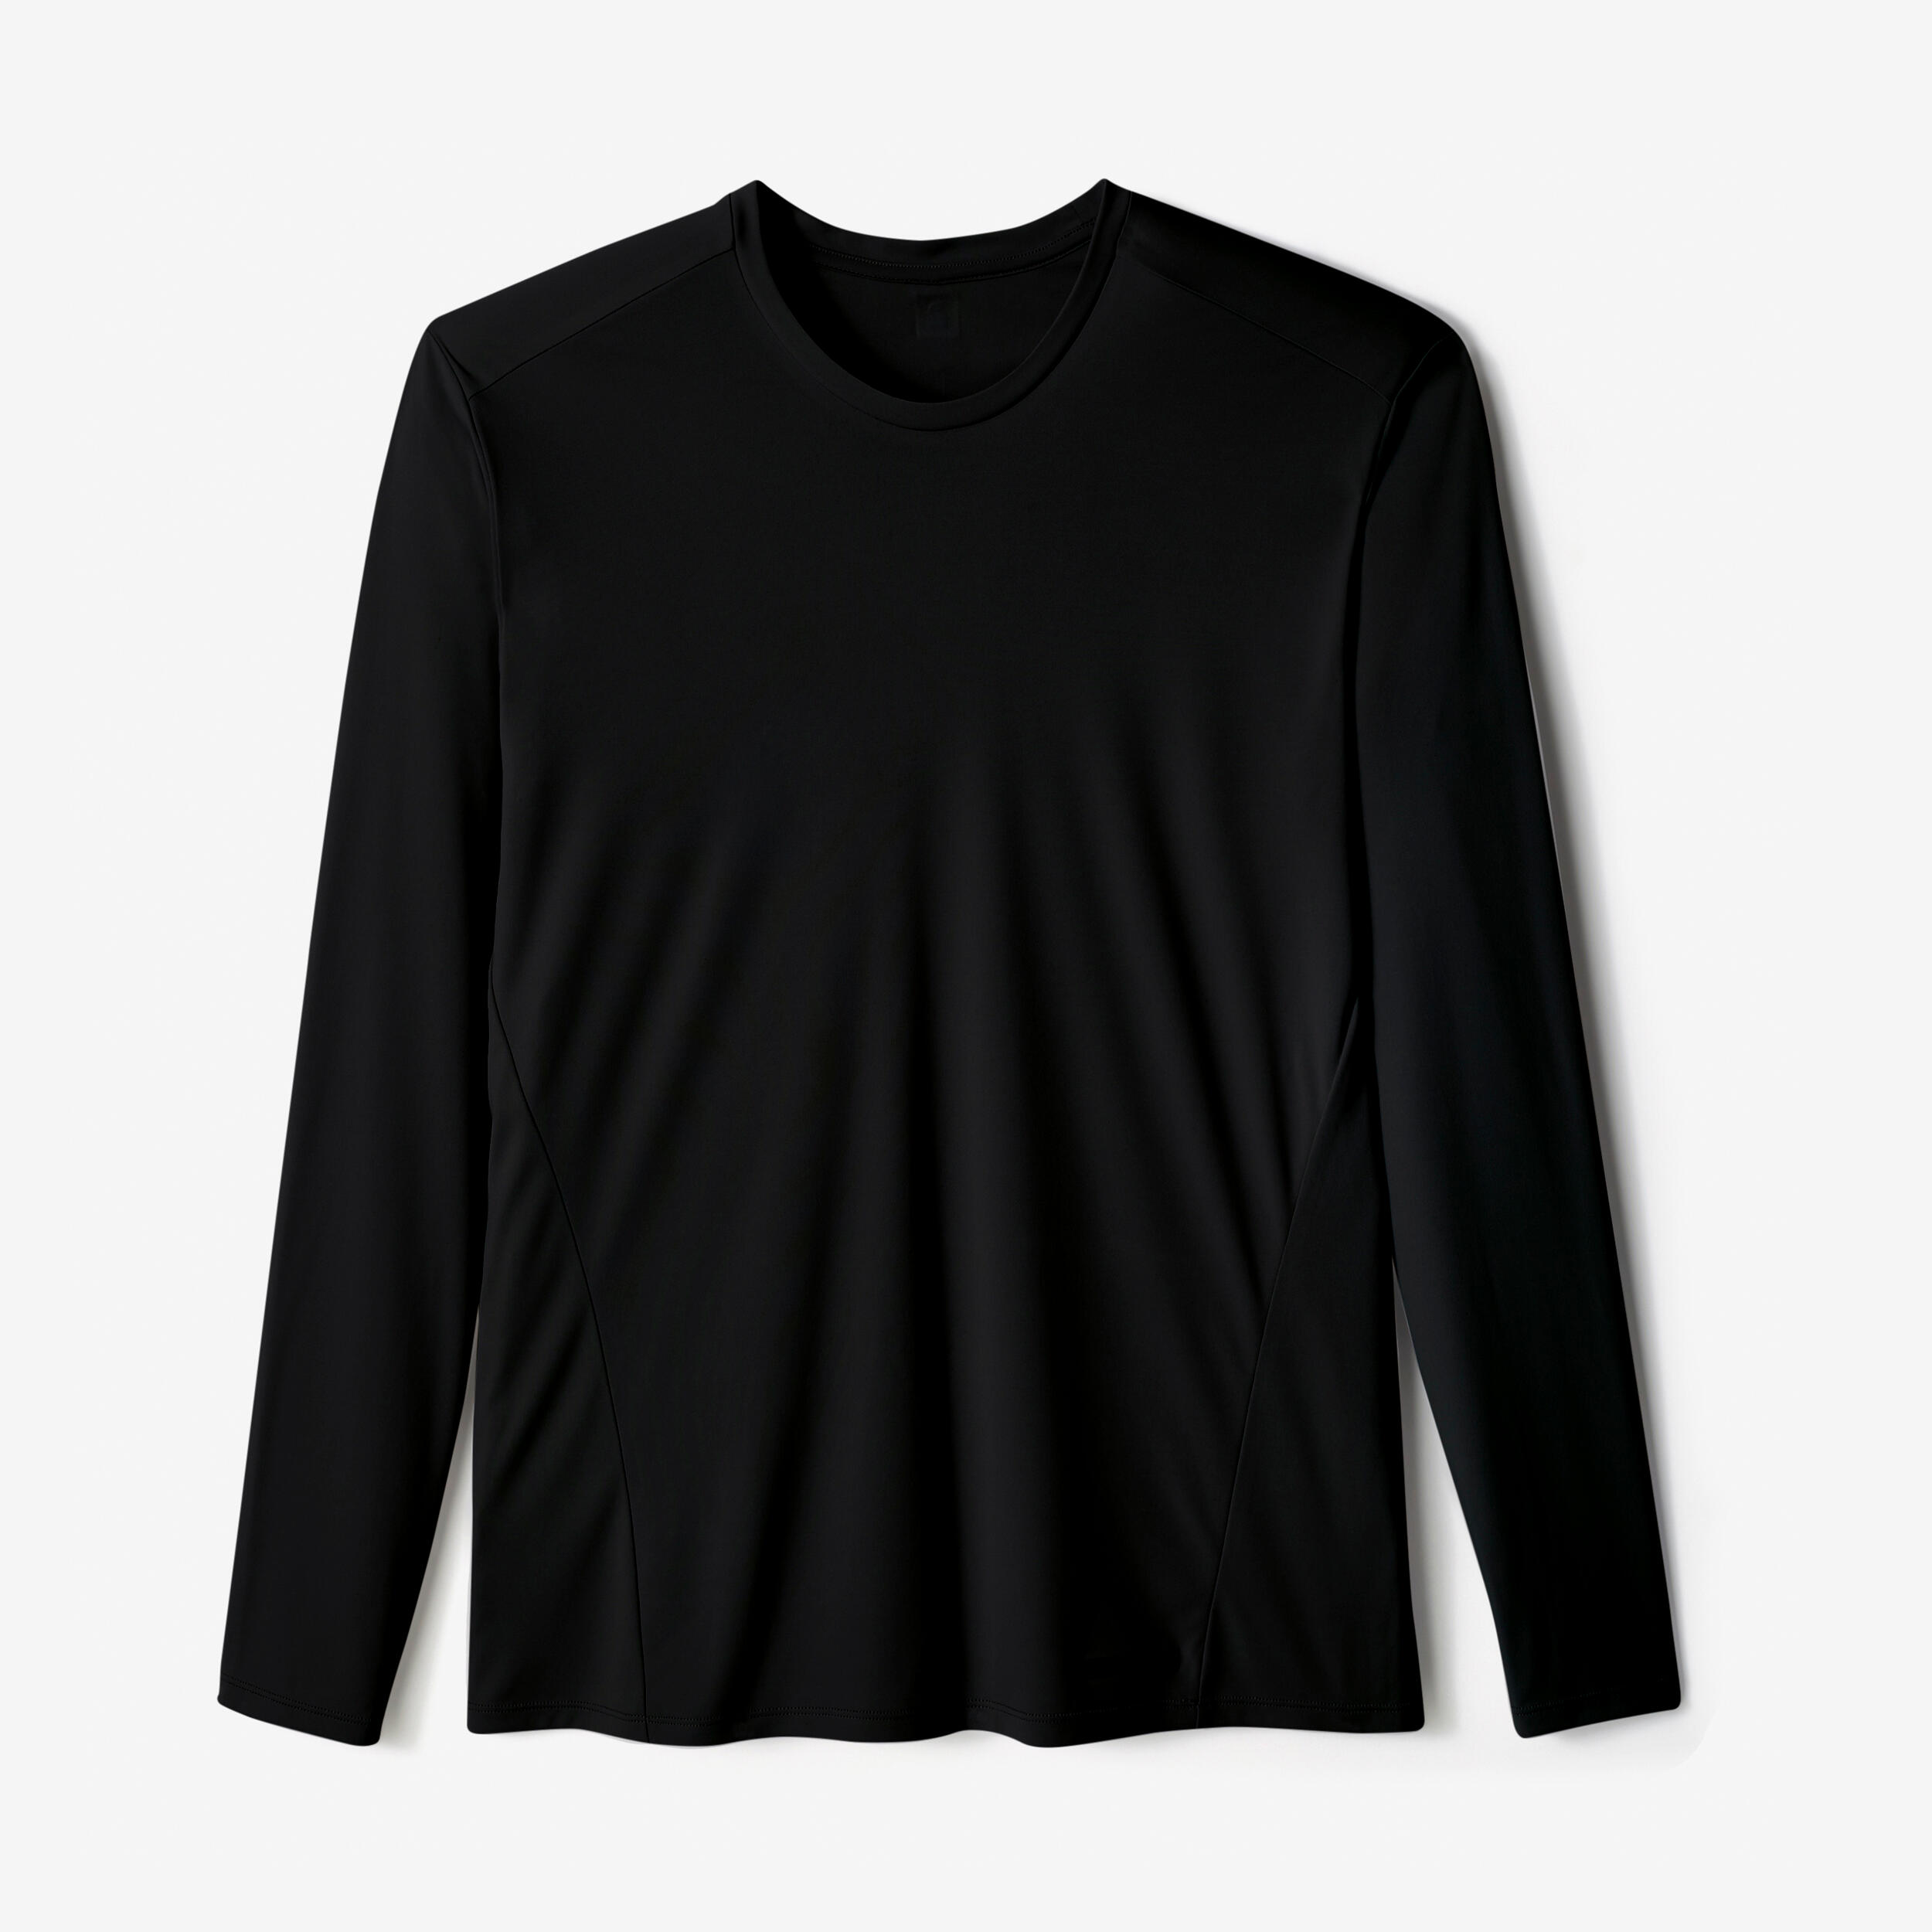 Buy DAGİ Black T-Shirt, Crew Neck, Long Sleeve Activewear for